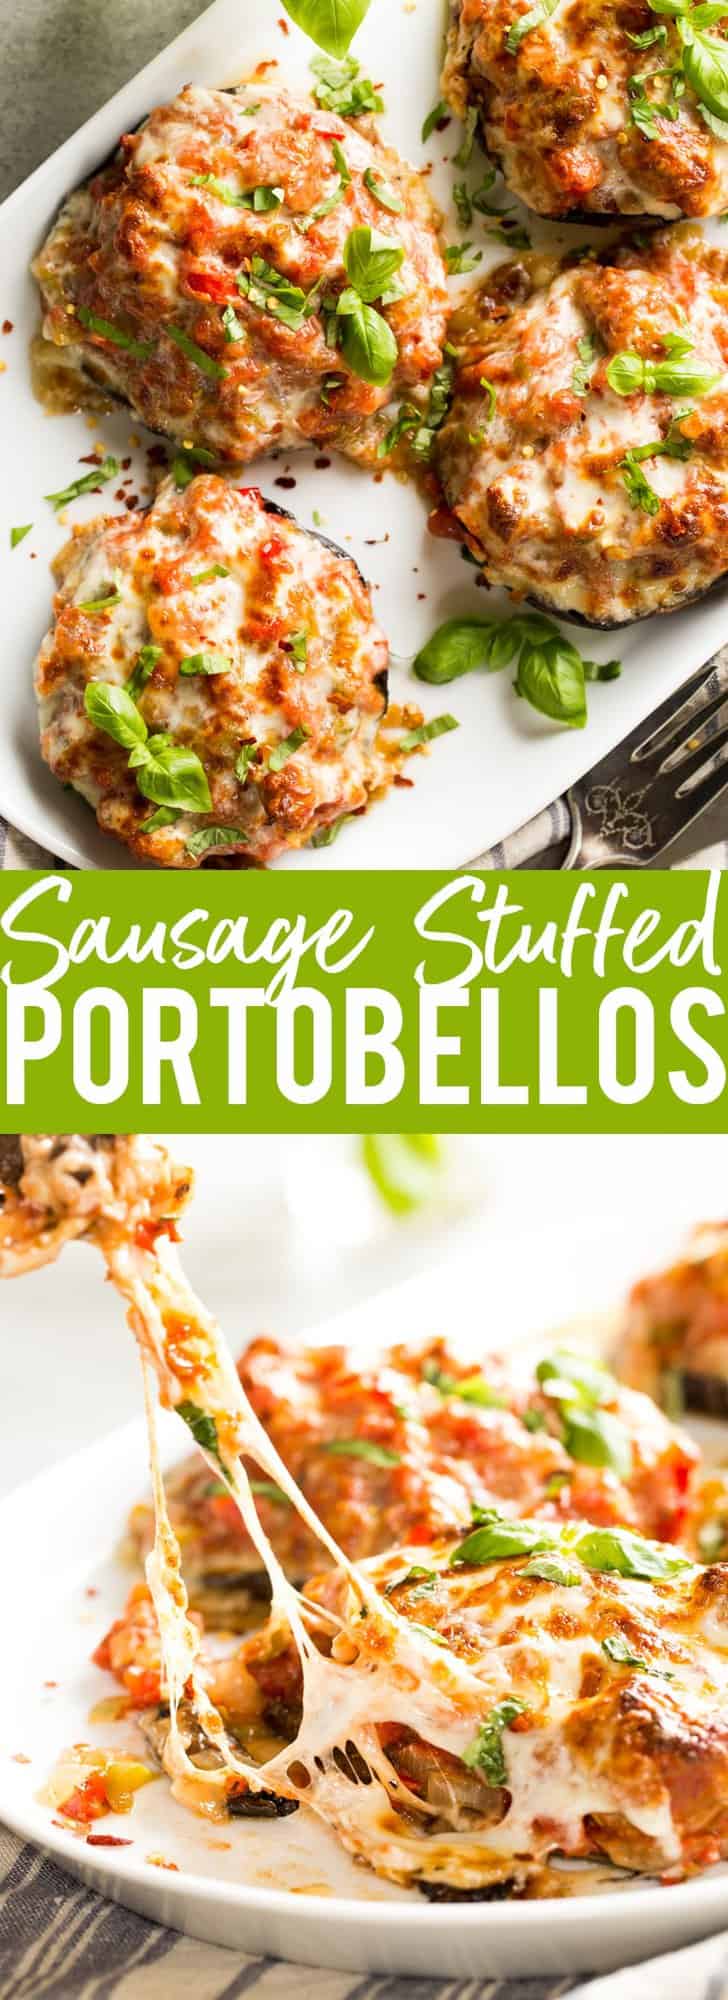 Sausage Stuffed Portobello Mushrooms | Low Carb Dinner | Clean Eating | Healthy Dinner Recipe | Portobello Mushroom Recipes | Portobella Mushroom recipe | Sausage recipe | Easy dinner recipe